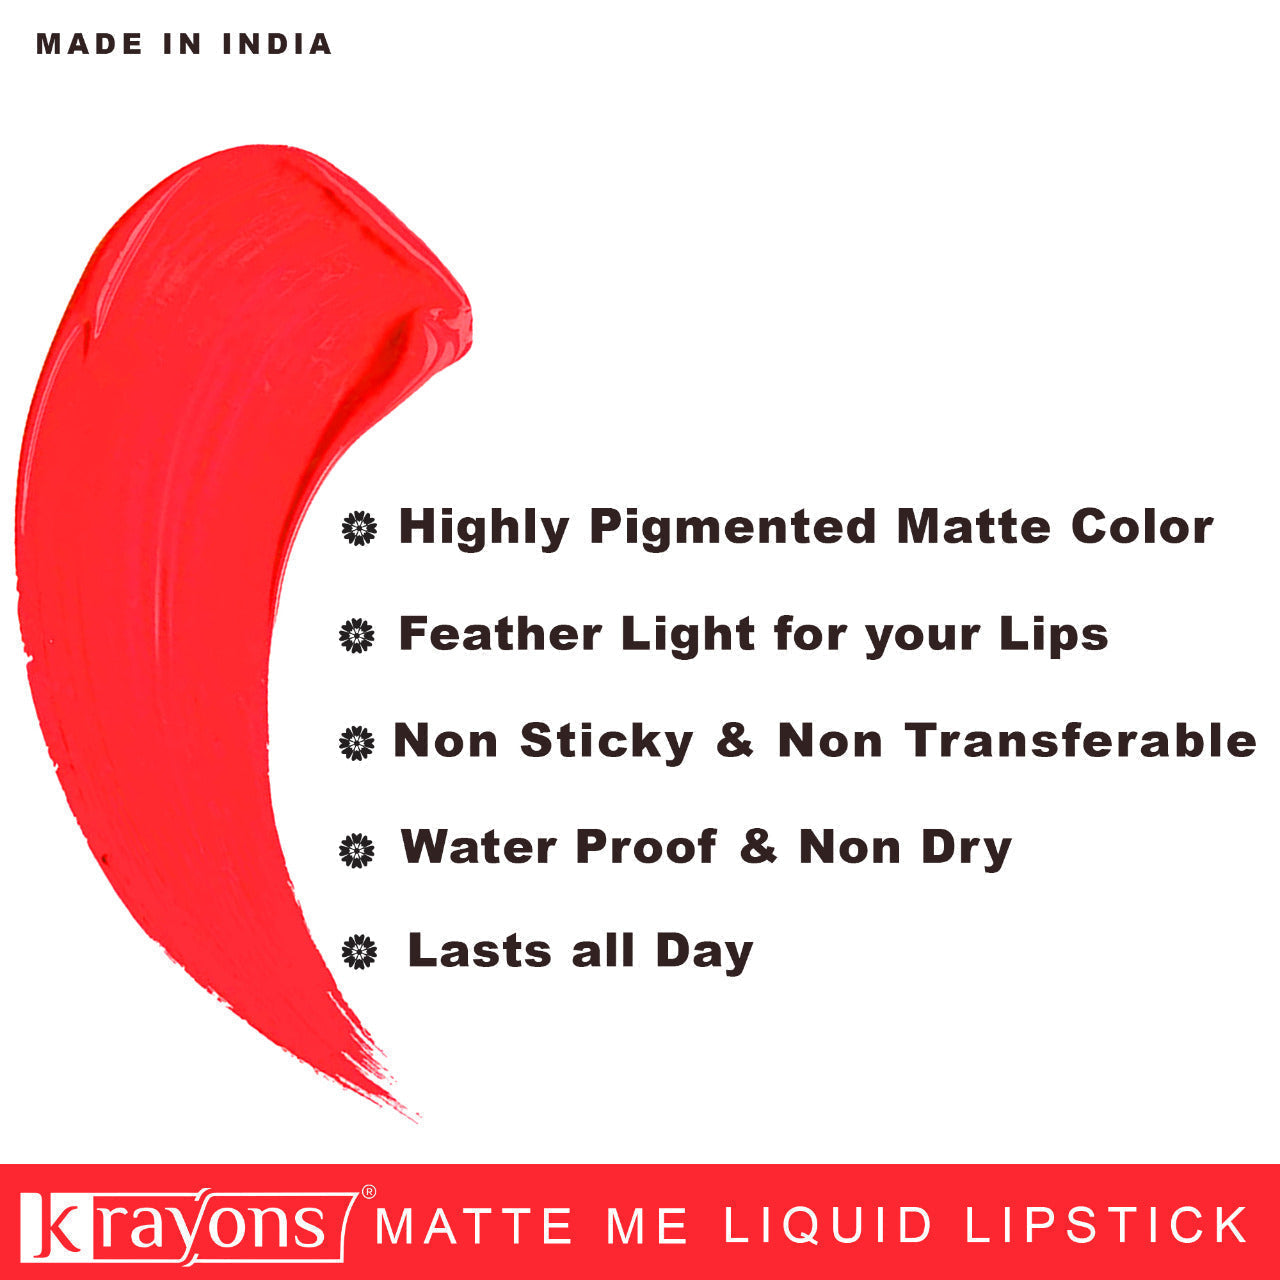 Krayons Matte Me Ultra Smooth Matte Liquid Lip Color, Mask Proof, Waterproof, Longlasting, 5ml Each, Combo, Pack of 3 (Sunset Orange, Wow Pink, Majestic Maroon)